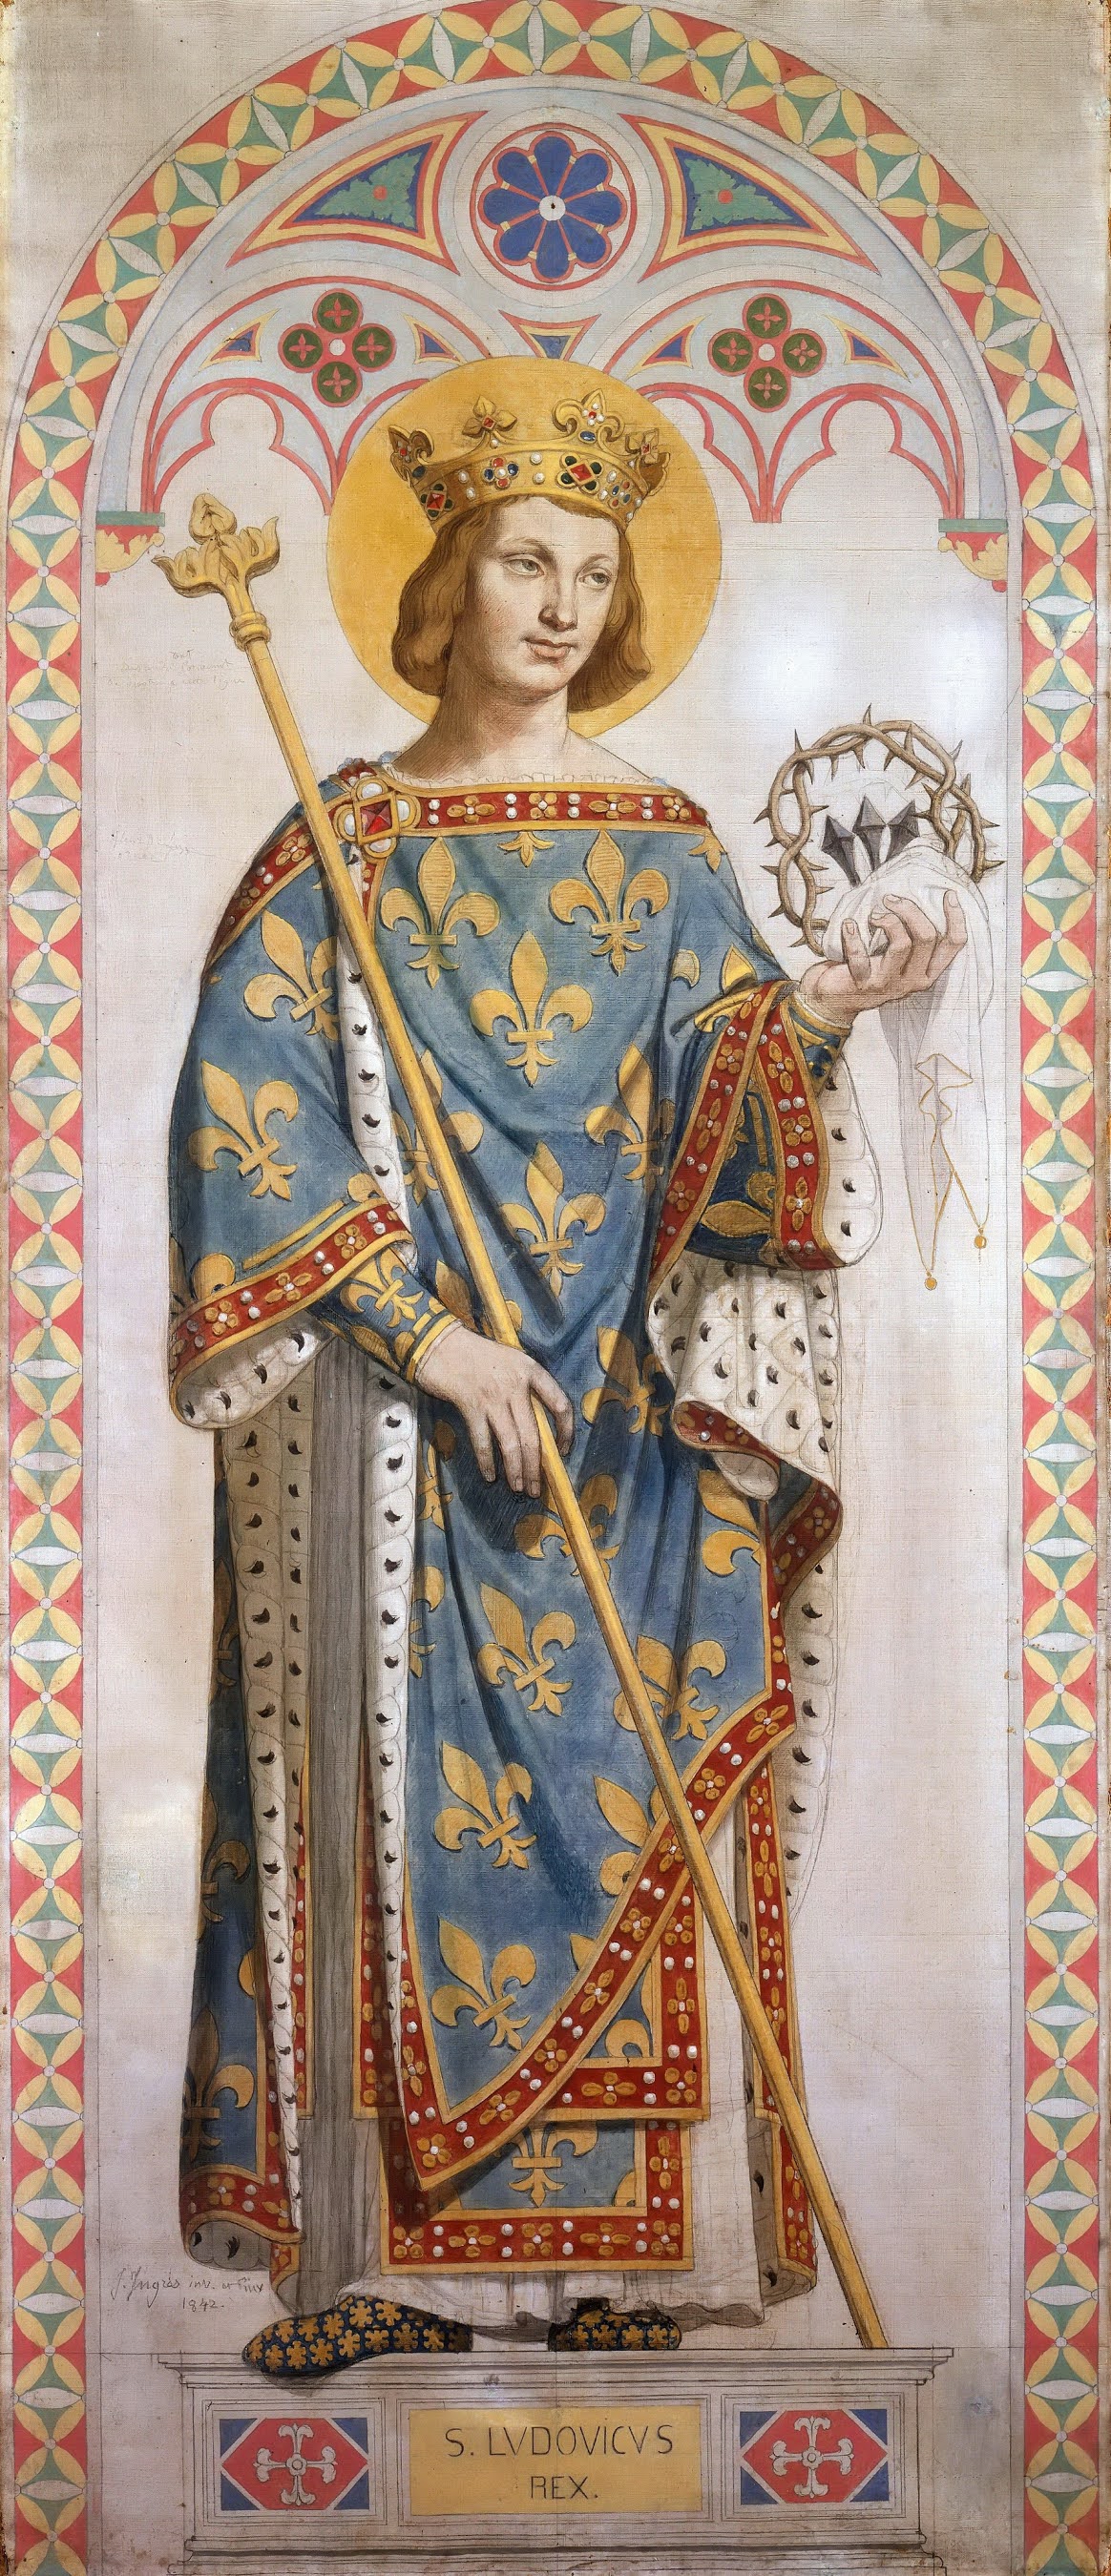 Король св. Людовик IX Святой Король Франции. Людовик 9 Святой Король Франции. Людовик IX Святой (фр. Louis IX, Saint Louis). Людовик IX Святой (1226—1270).